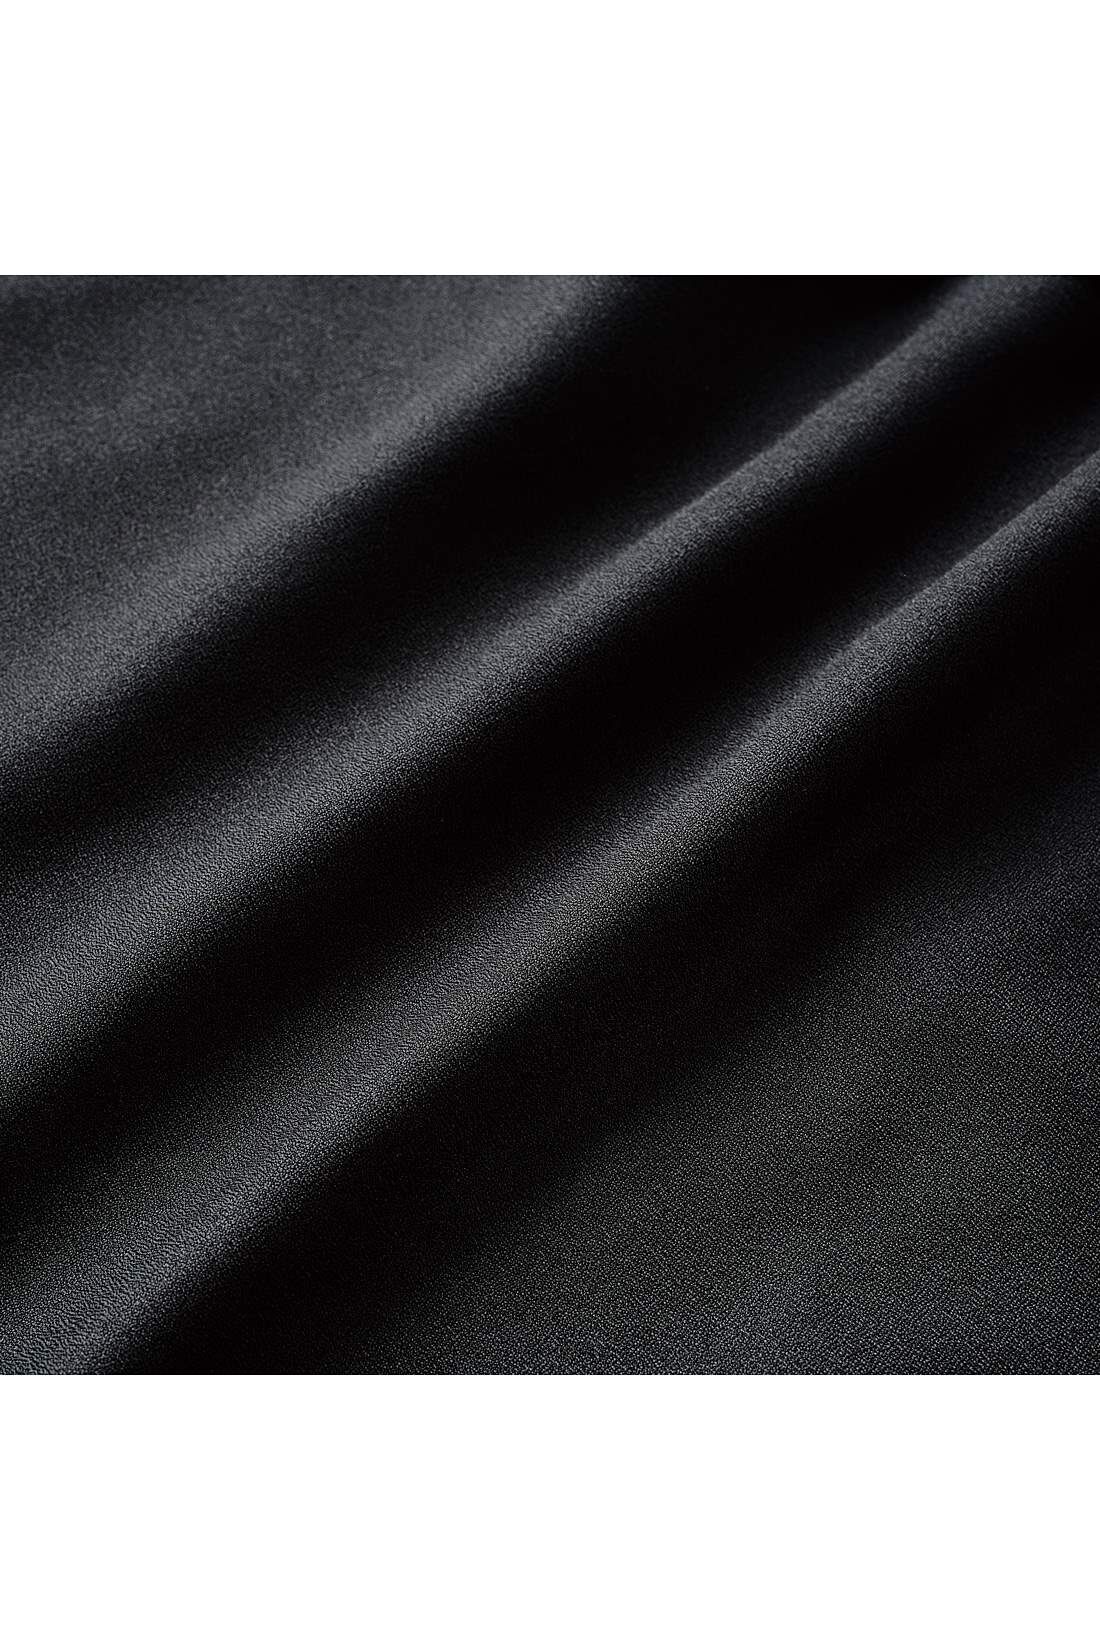 DRECO by IEDIT|DRECOバイヤーズセレクト　タックデザインが旬な　ジョーゼットミディスカート〈ブラック〉|表情のあるジョーゼット素材。